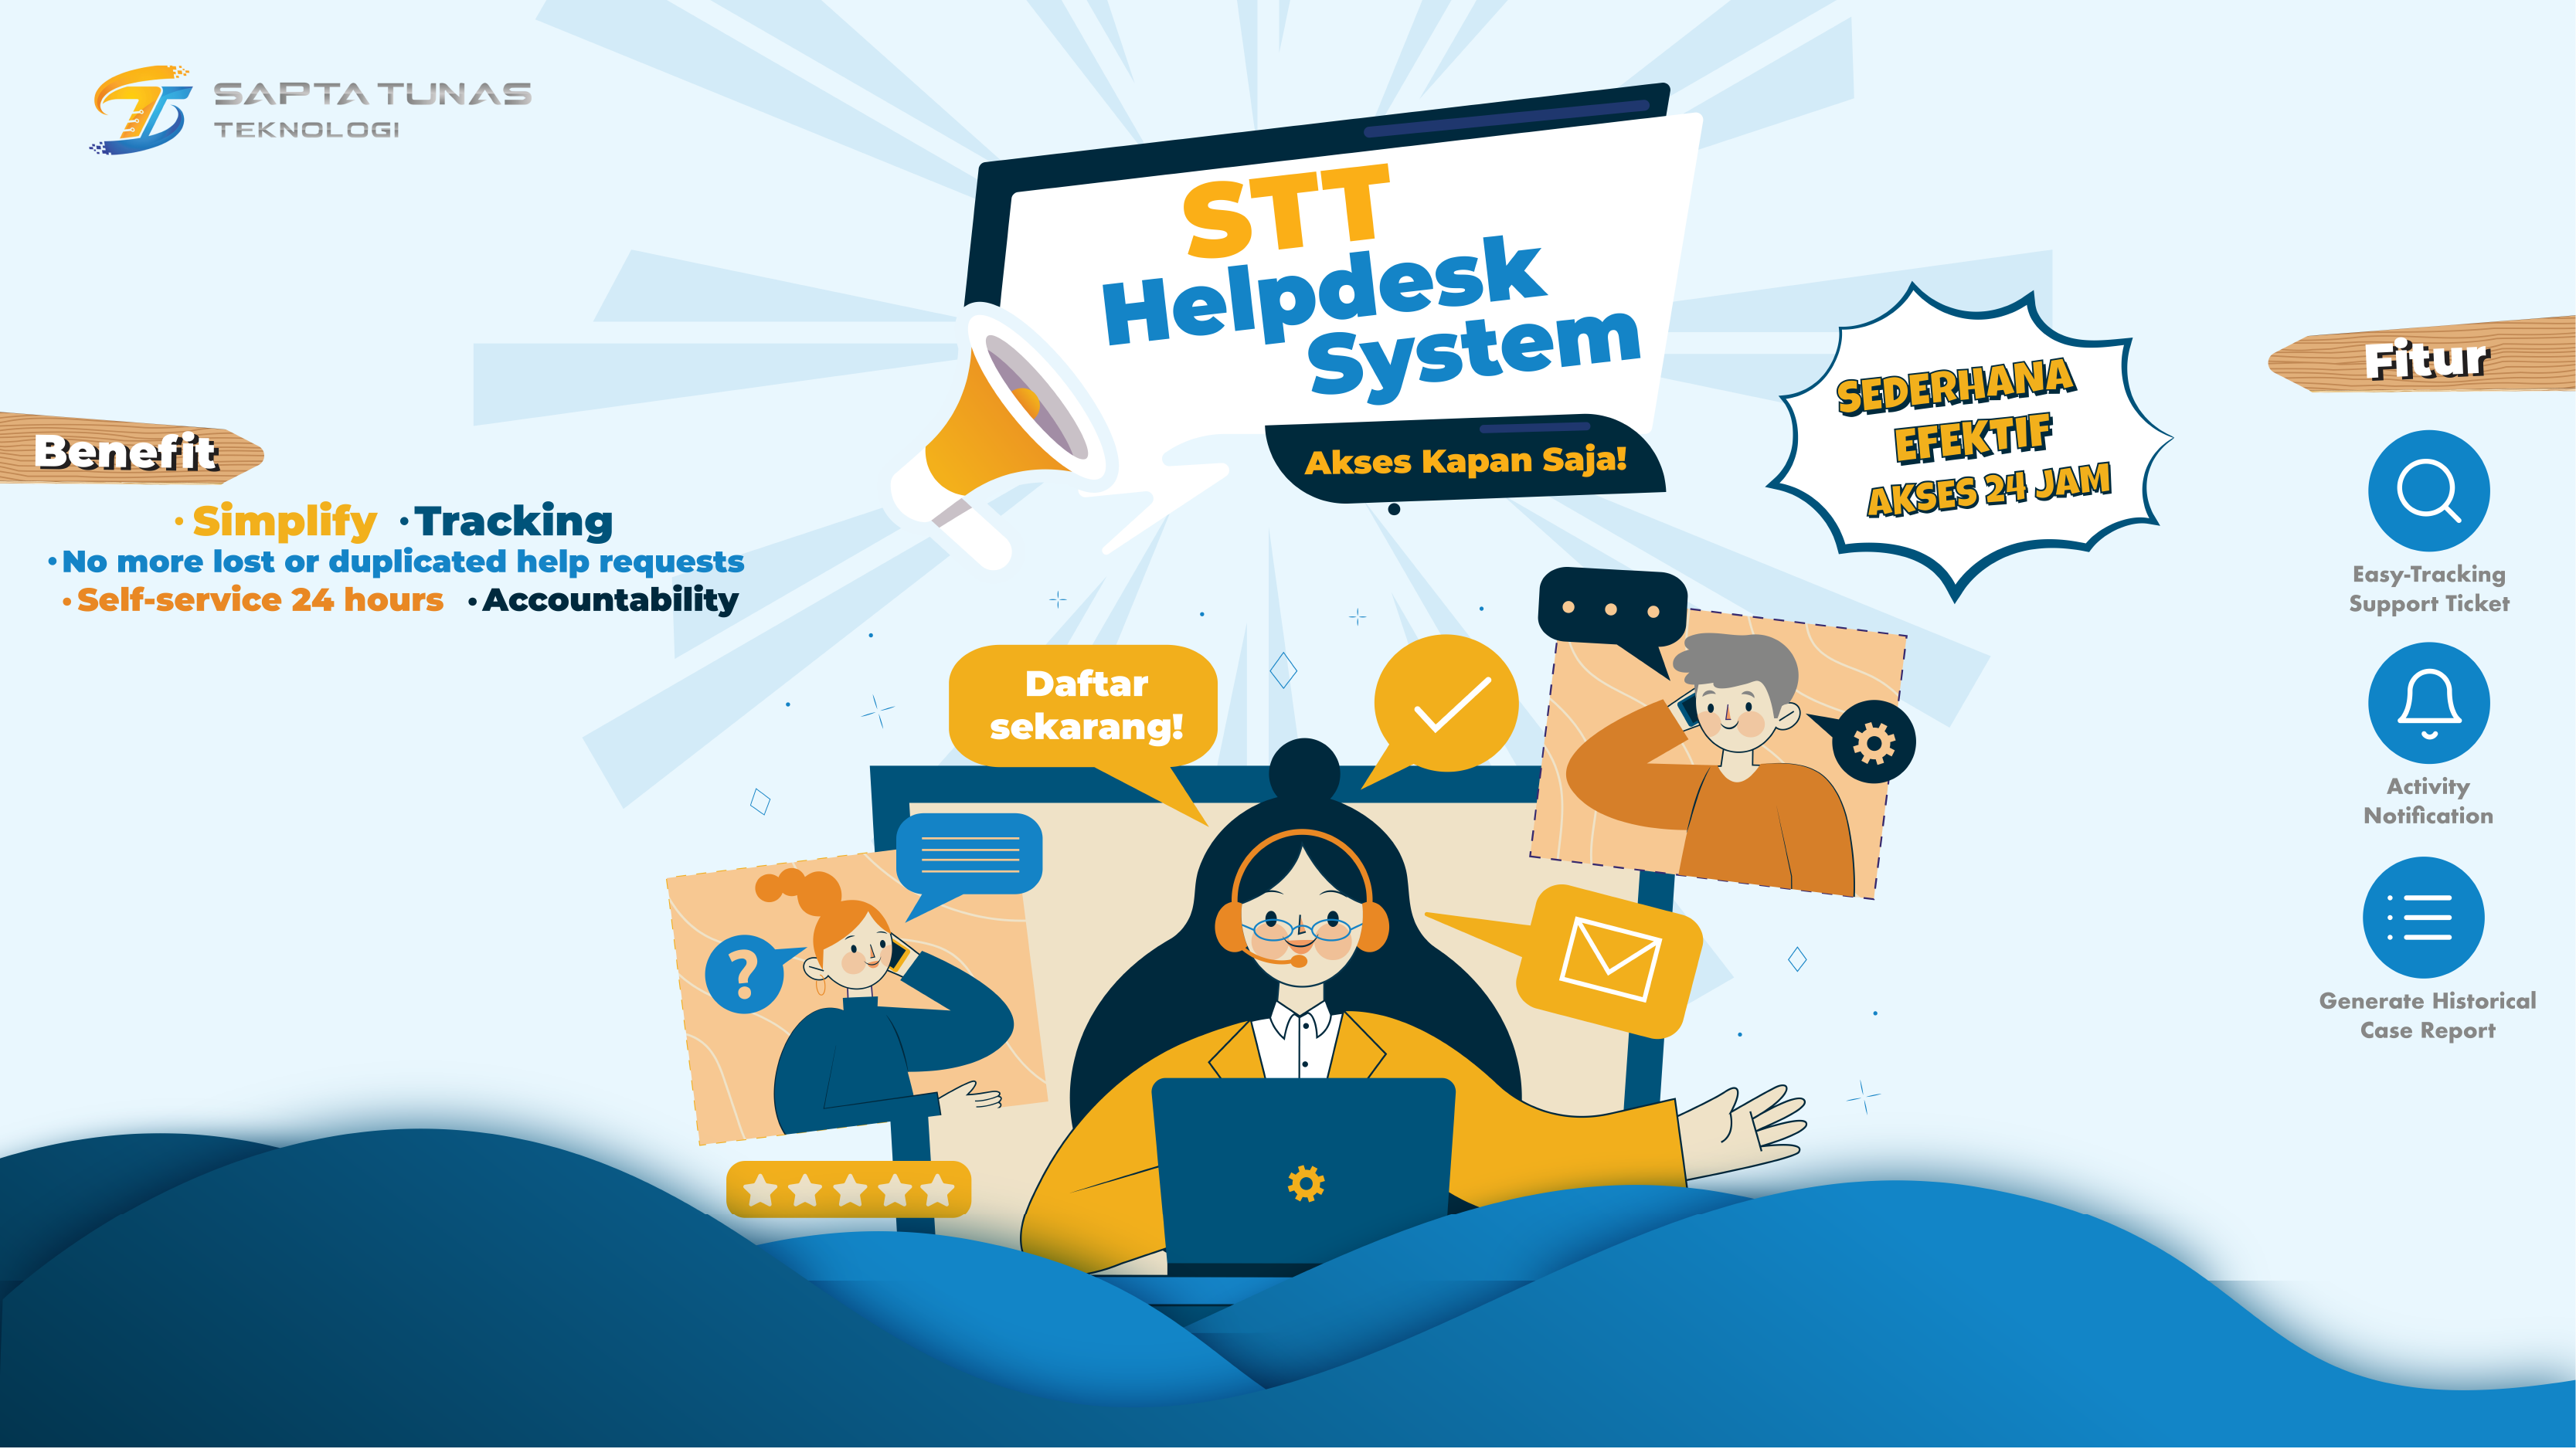 STT (Sapta Tunas Teknologi) Helpdesk is Launched